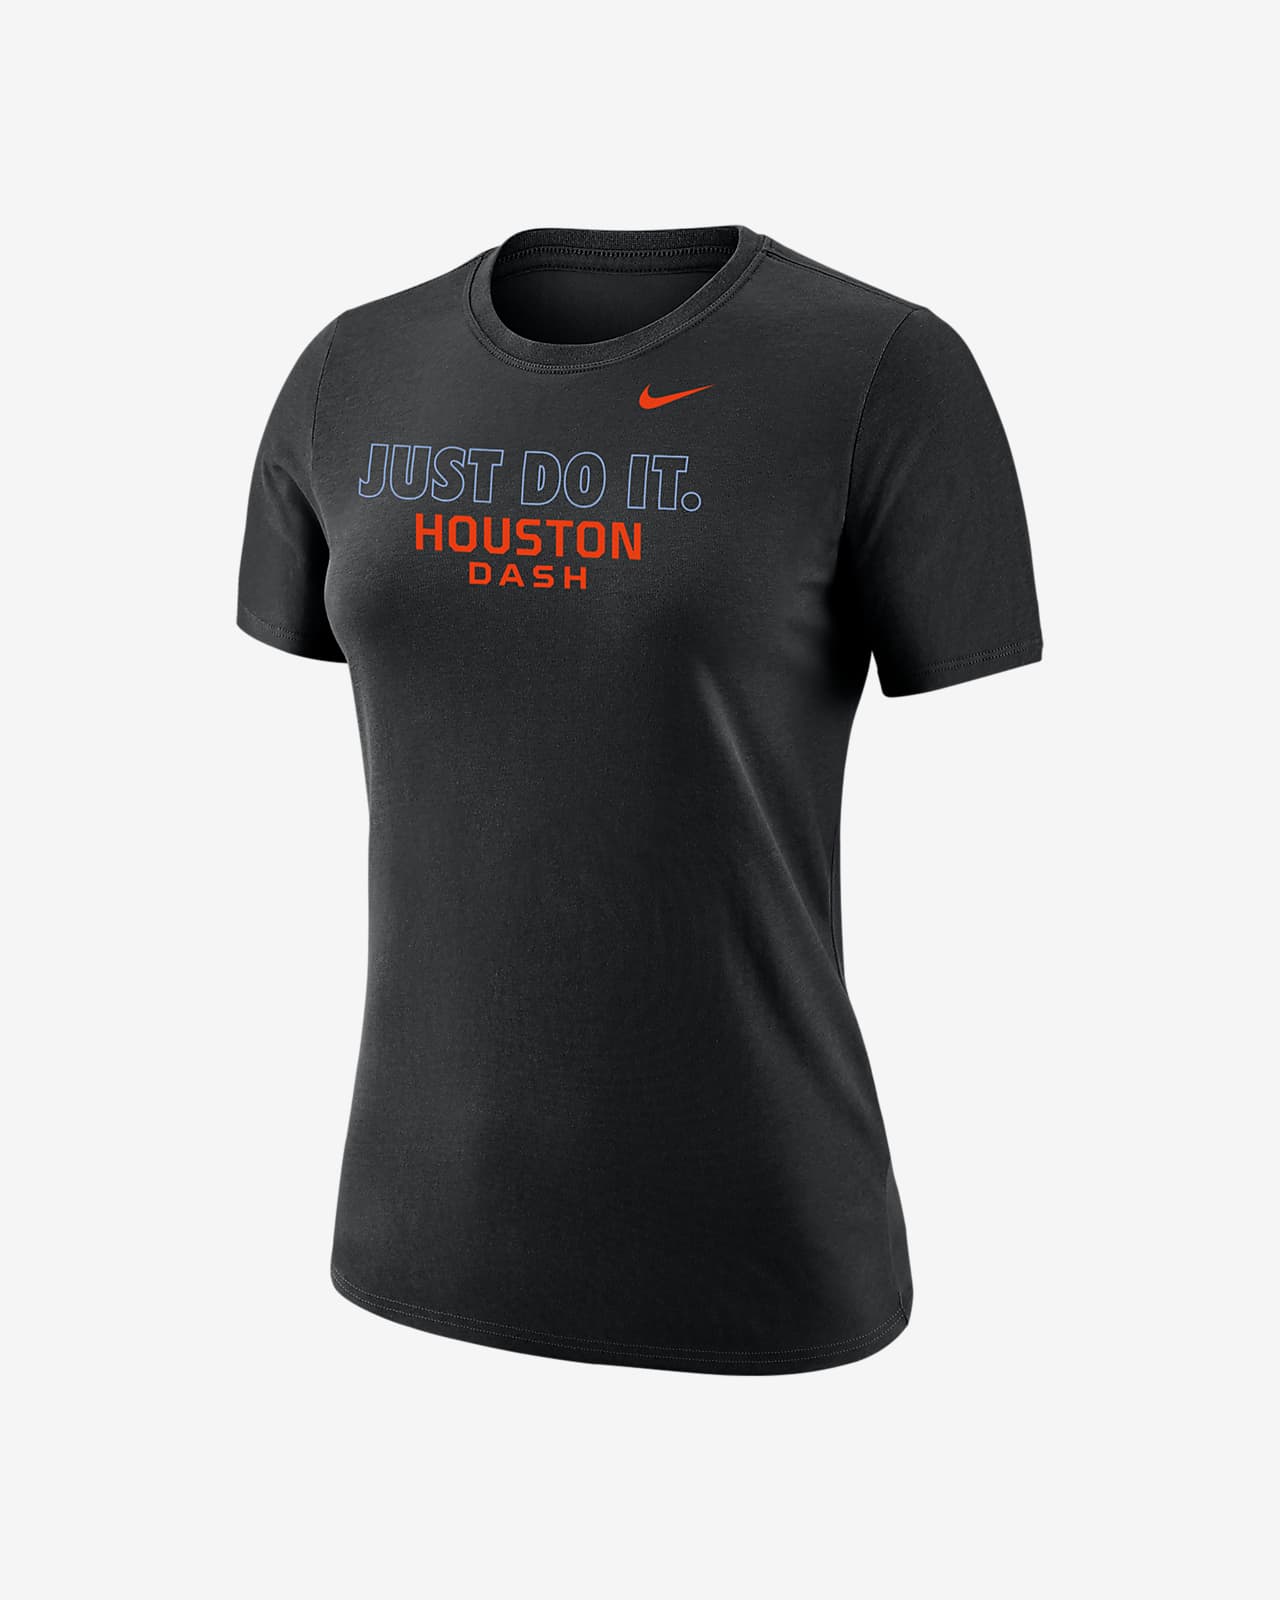 Houston Dash Women's Nike Soccer T-Shirt